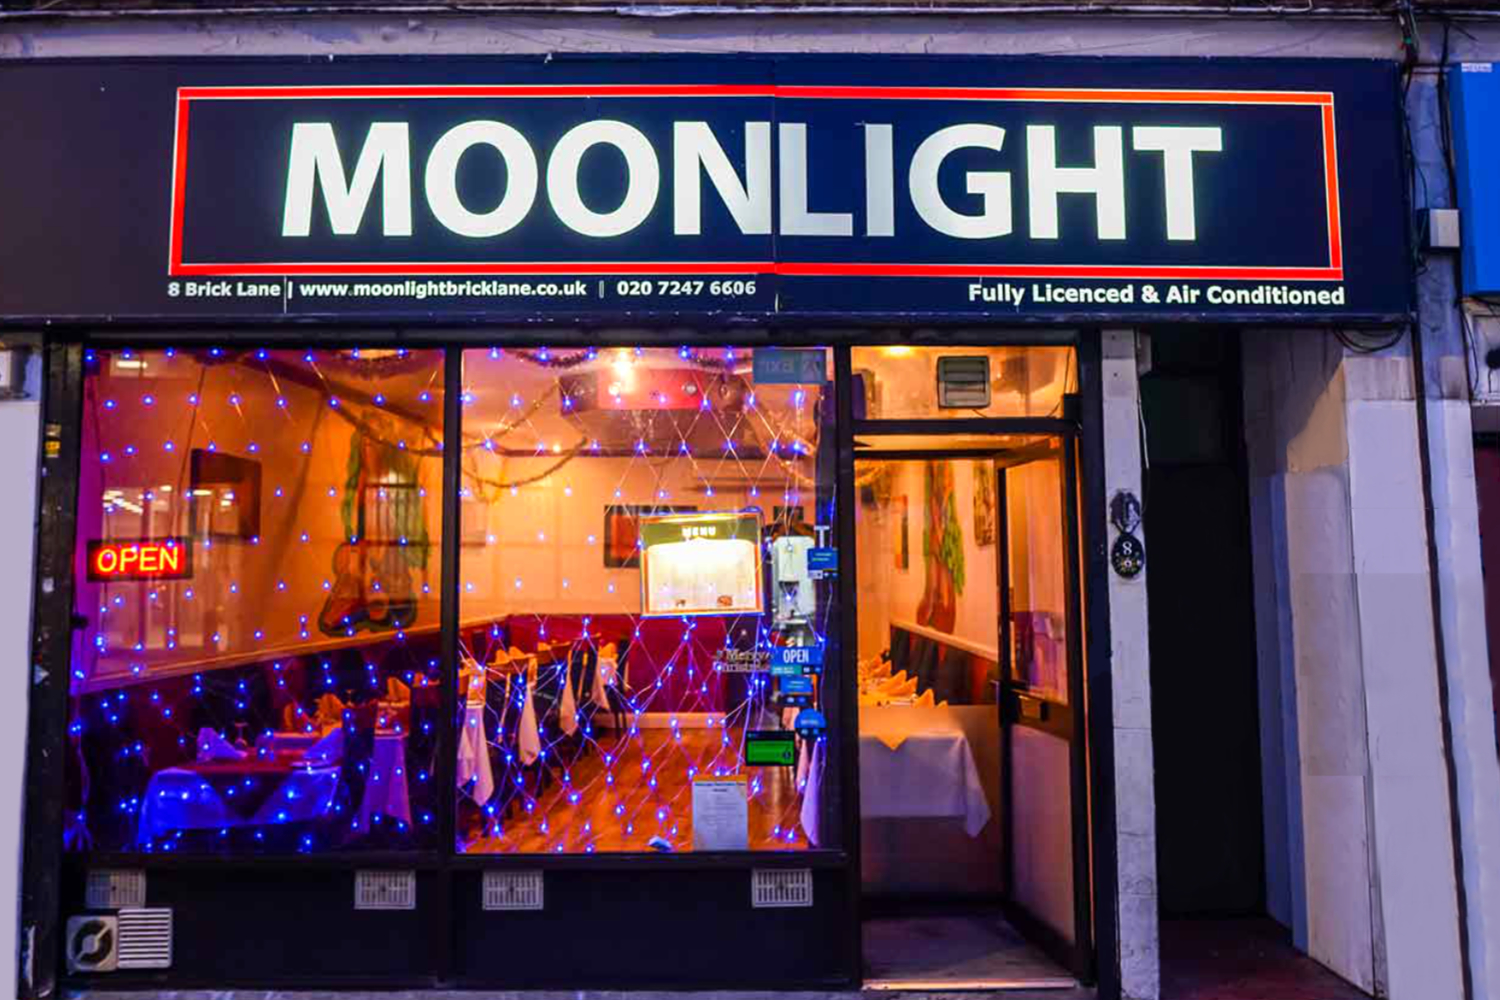 Moonlight restaurant, Brick Lane, East End of London.